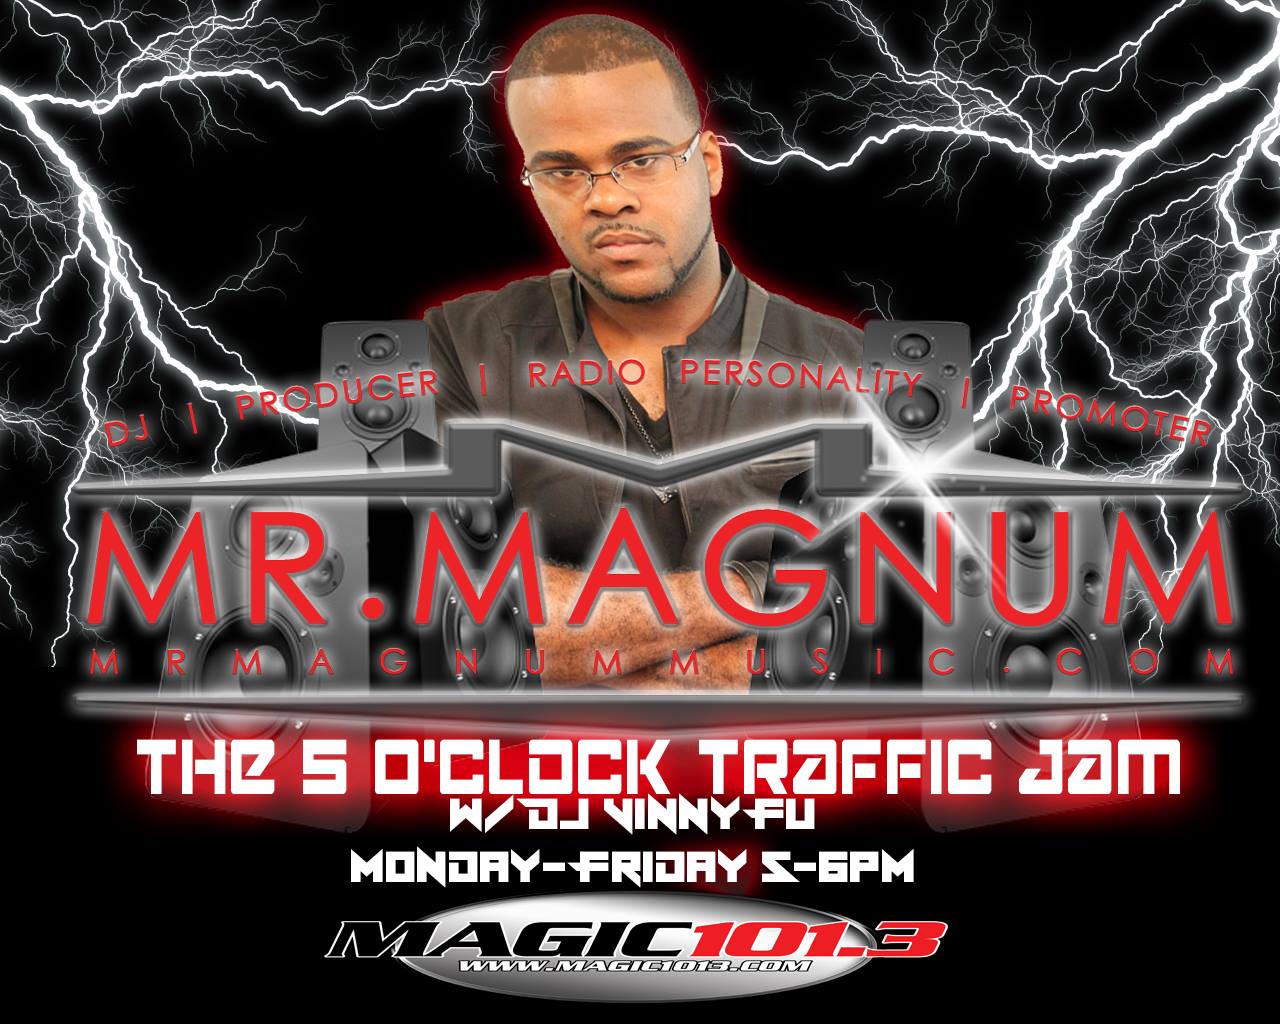 The 5 O’Clock Traffic Jam 20170118 on Magic 101.3